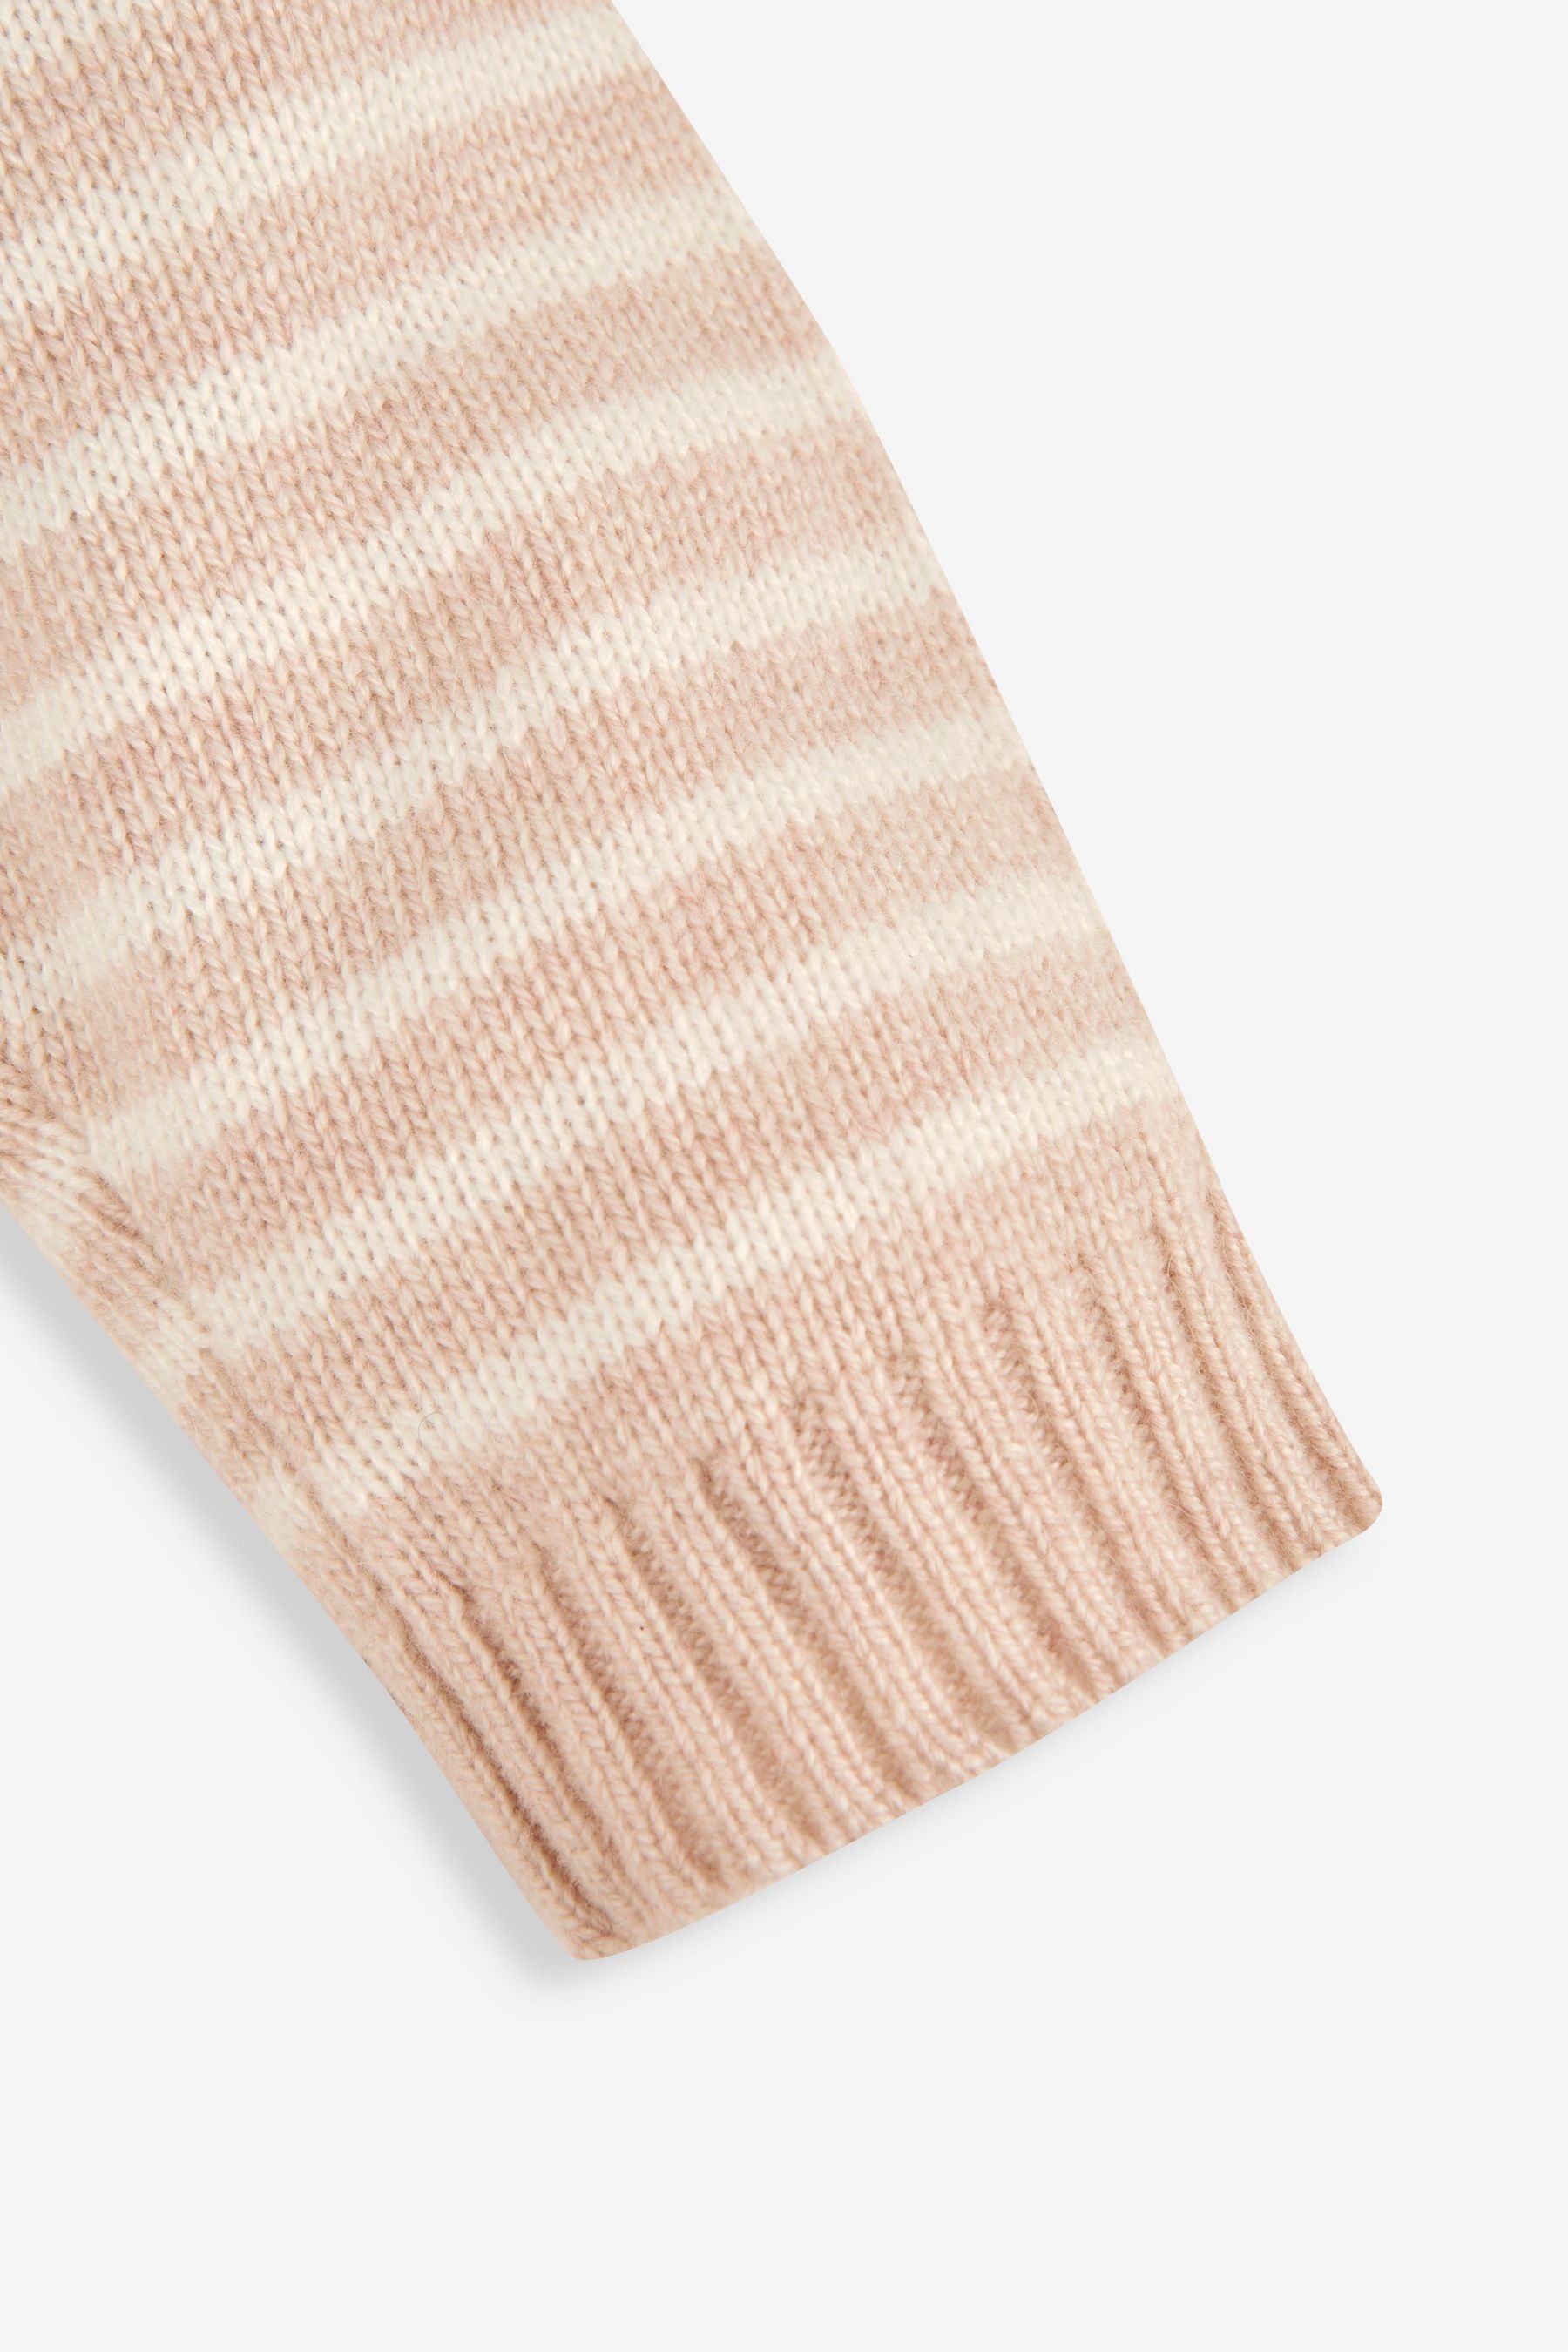 Buy JoJo Maman Bébé Stone Bear Baby Knit Set from the Next UK online shop